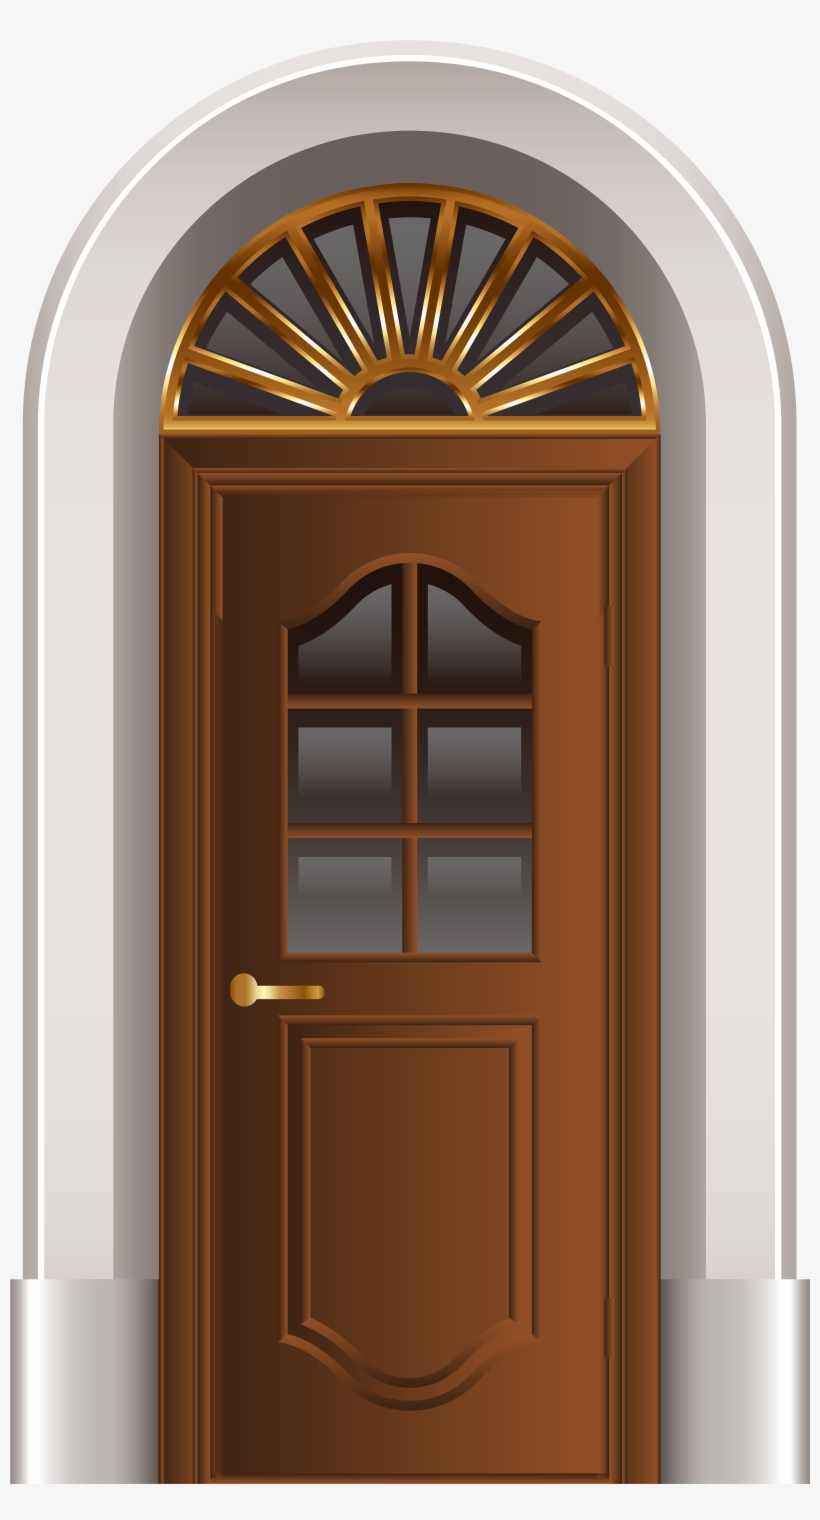 Exterior Door Png Clipart - House, transparent png #958090